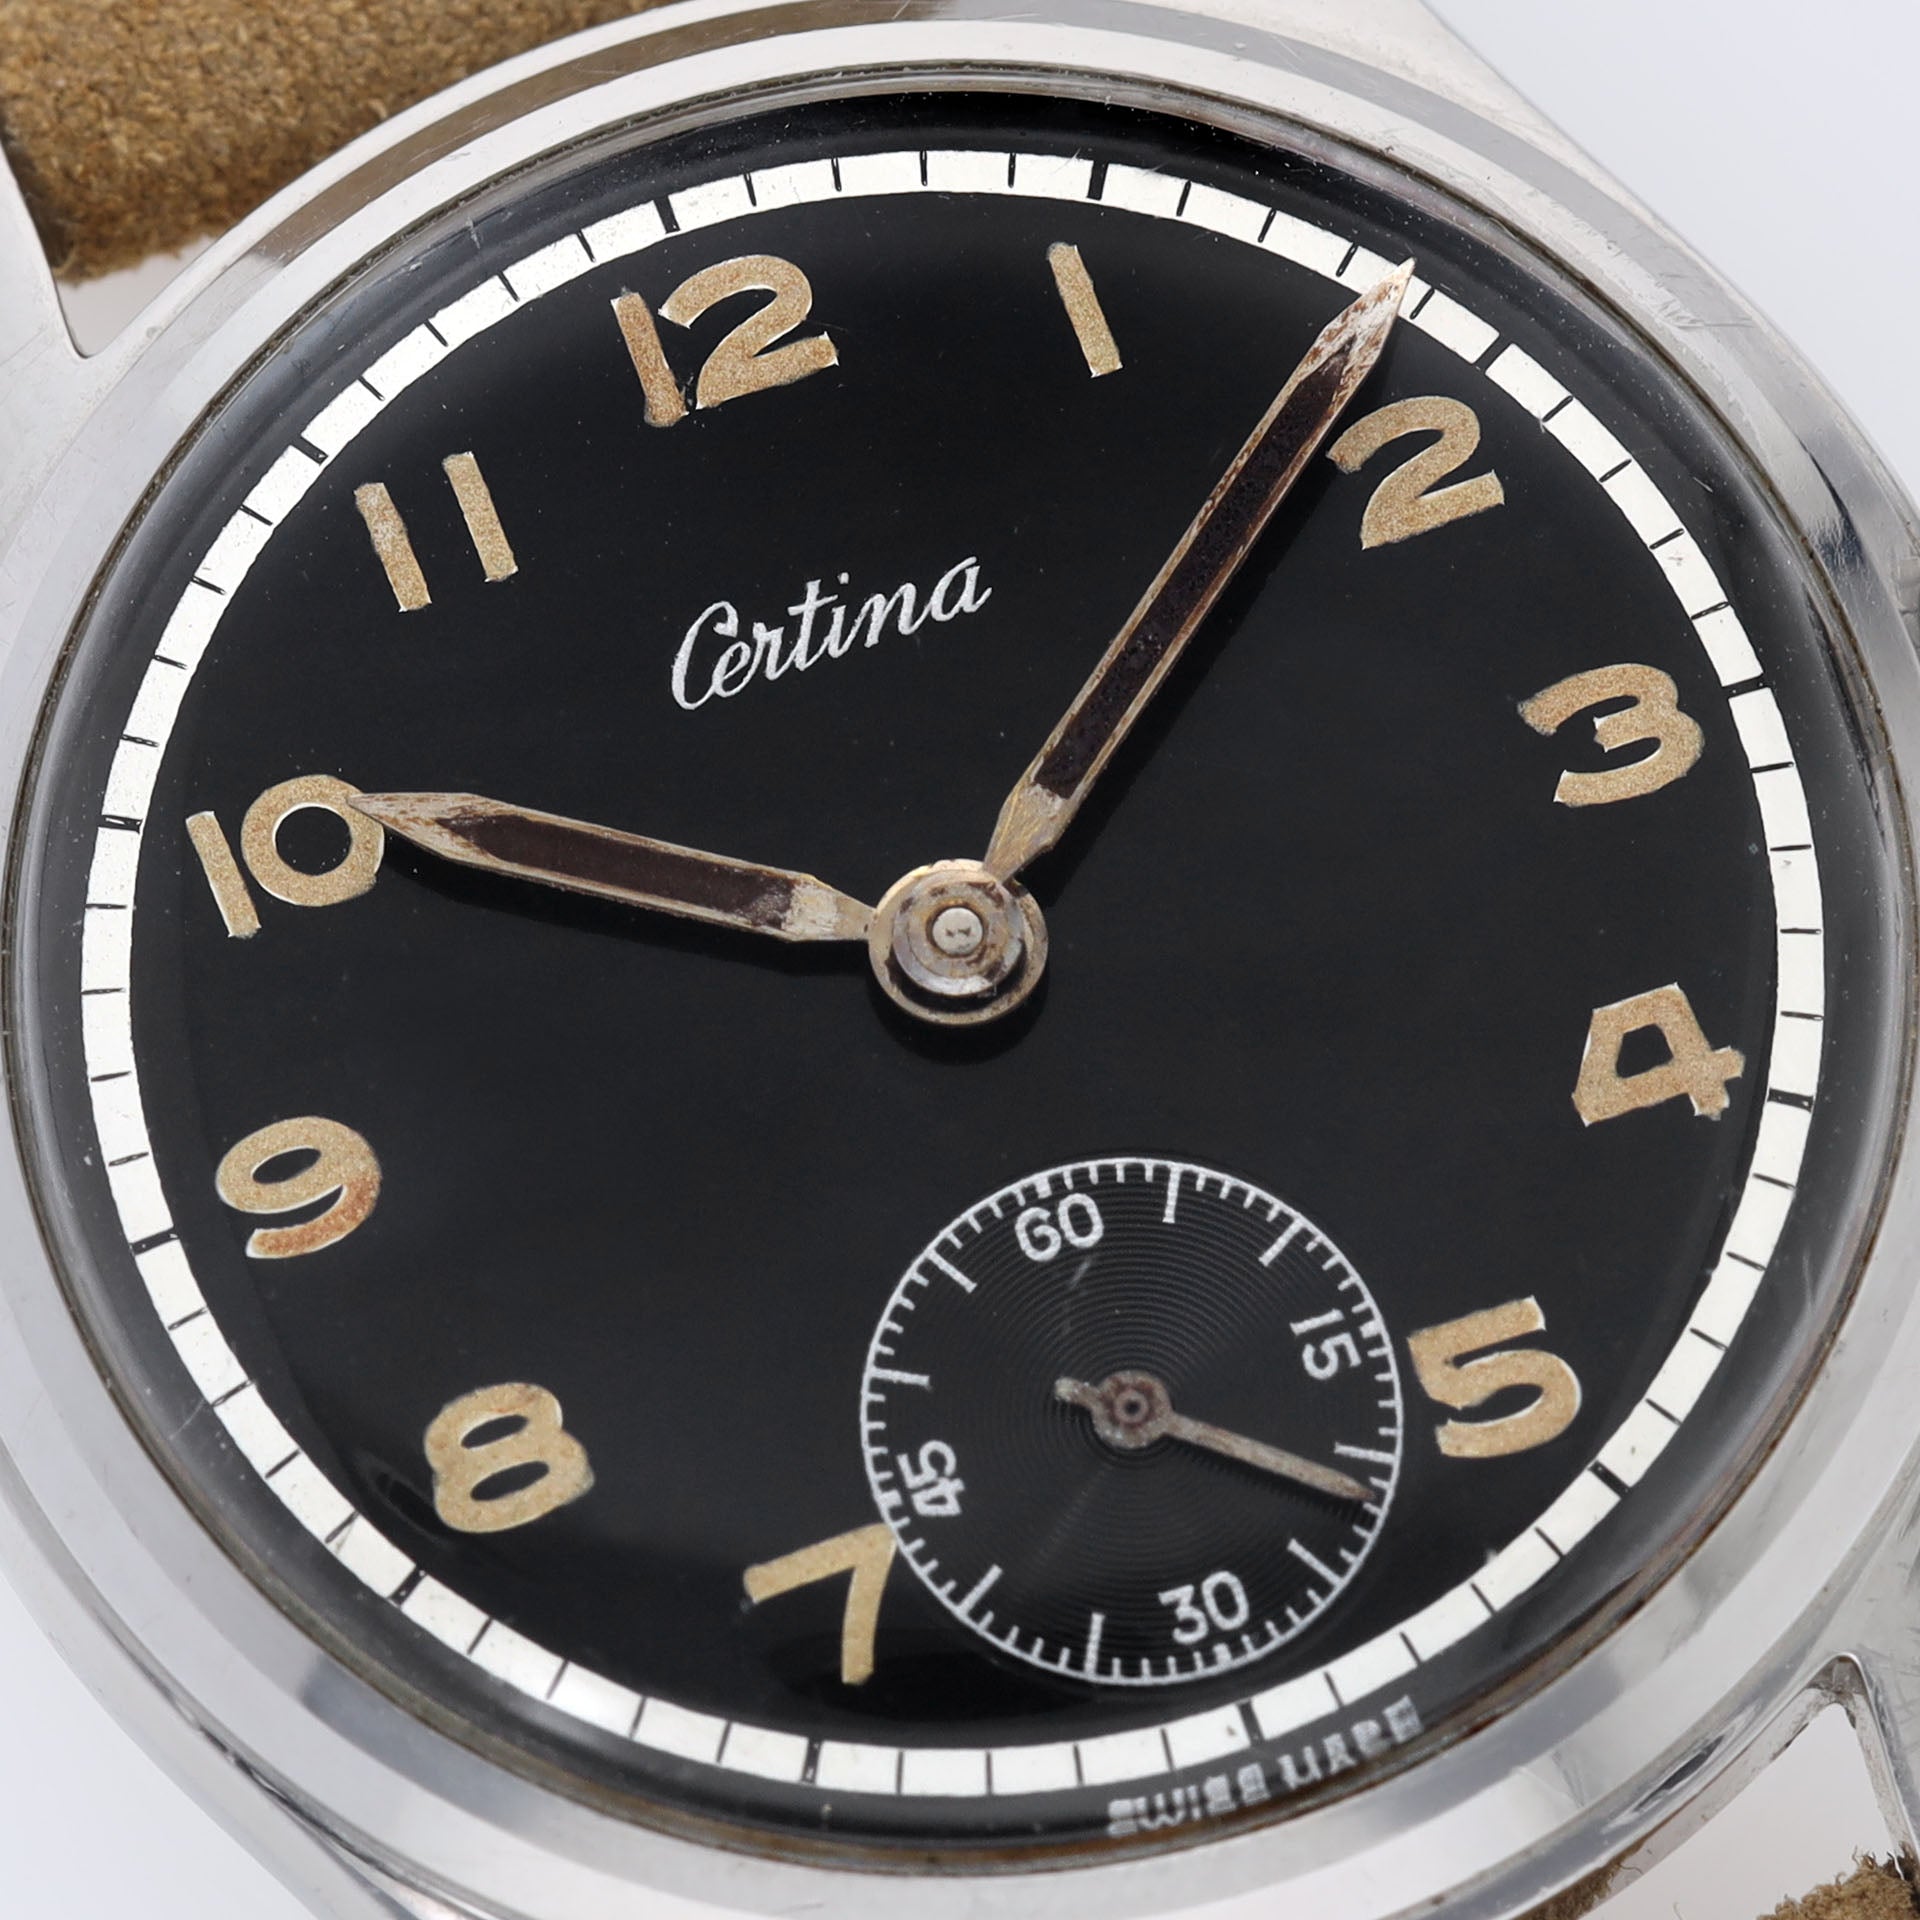 Certina 8721.1 Dress Watch in Steel Glossy Black Dial